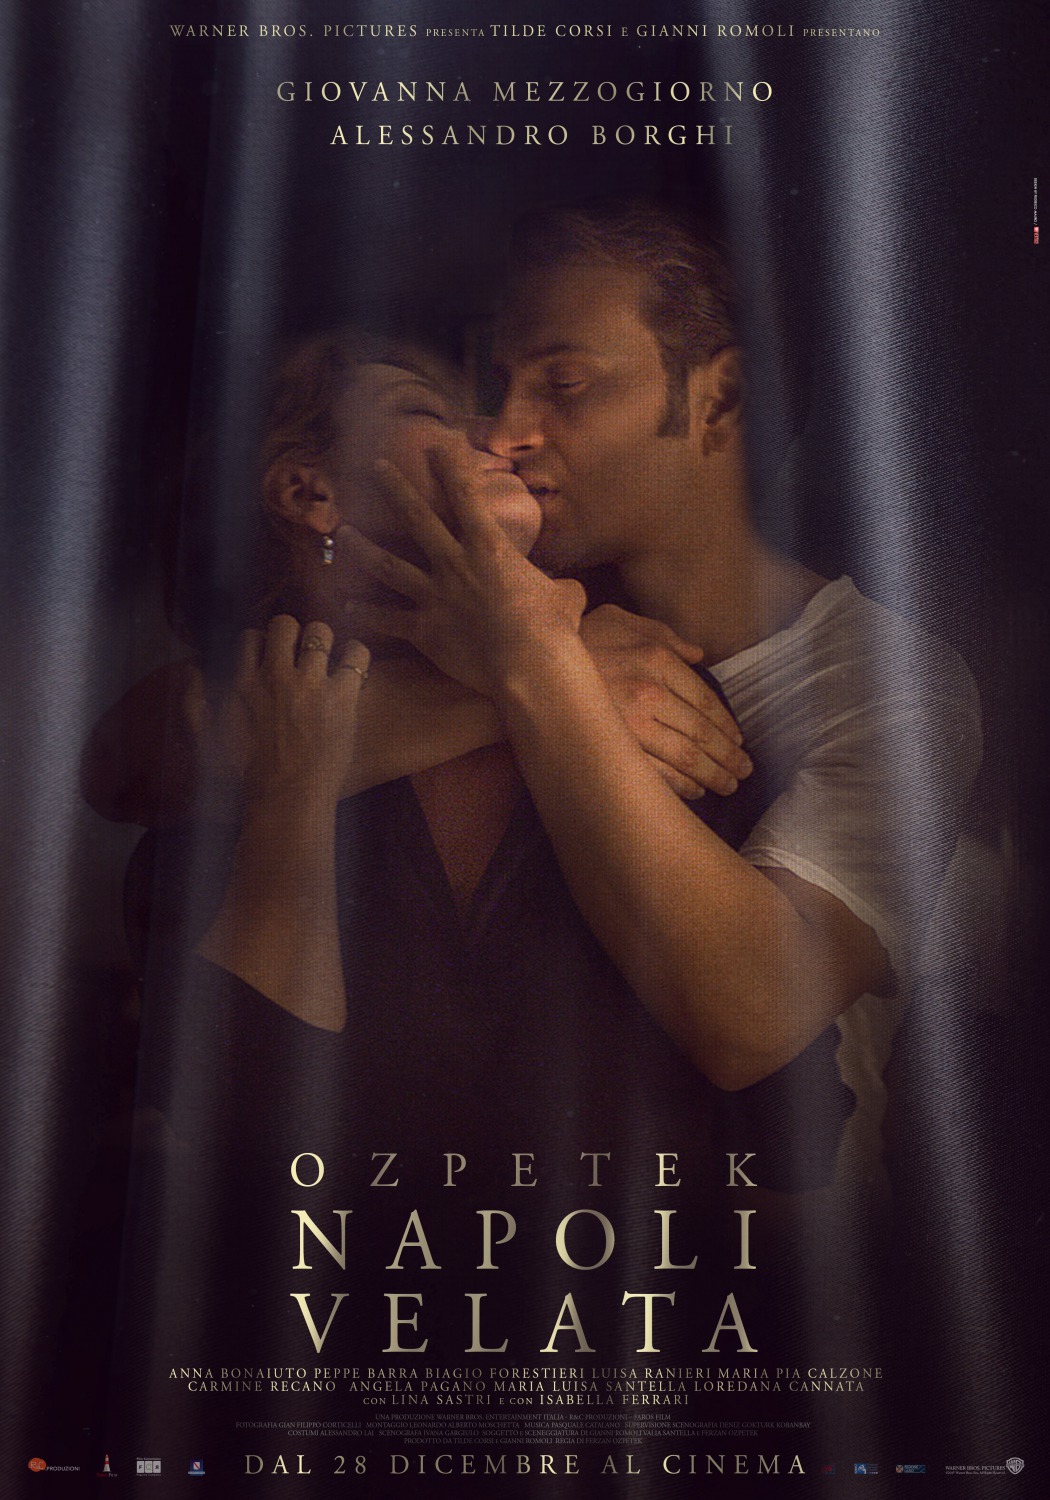 Extra Large Movie Poster Image for Napoli velata (#2 of 4)